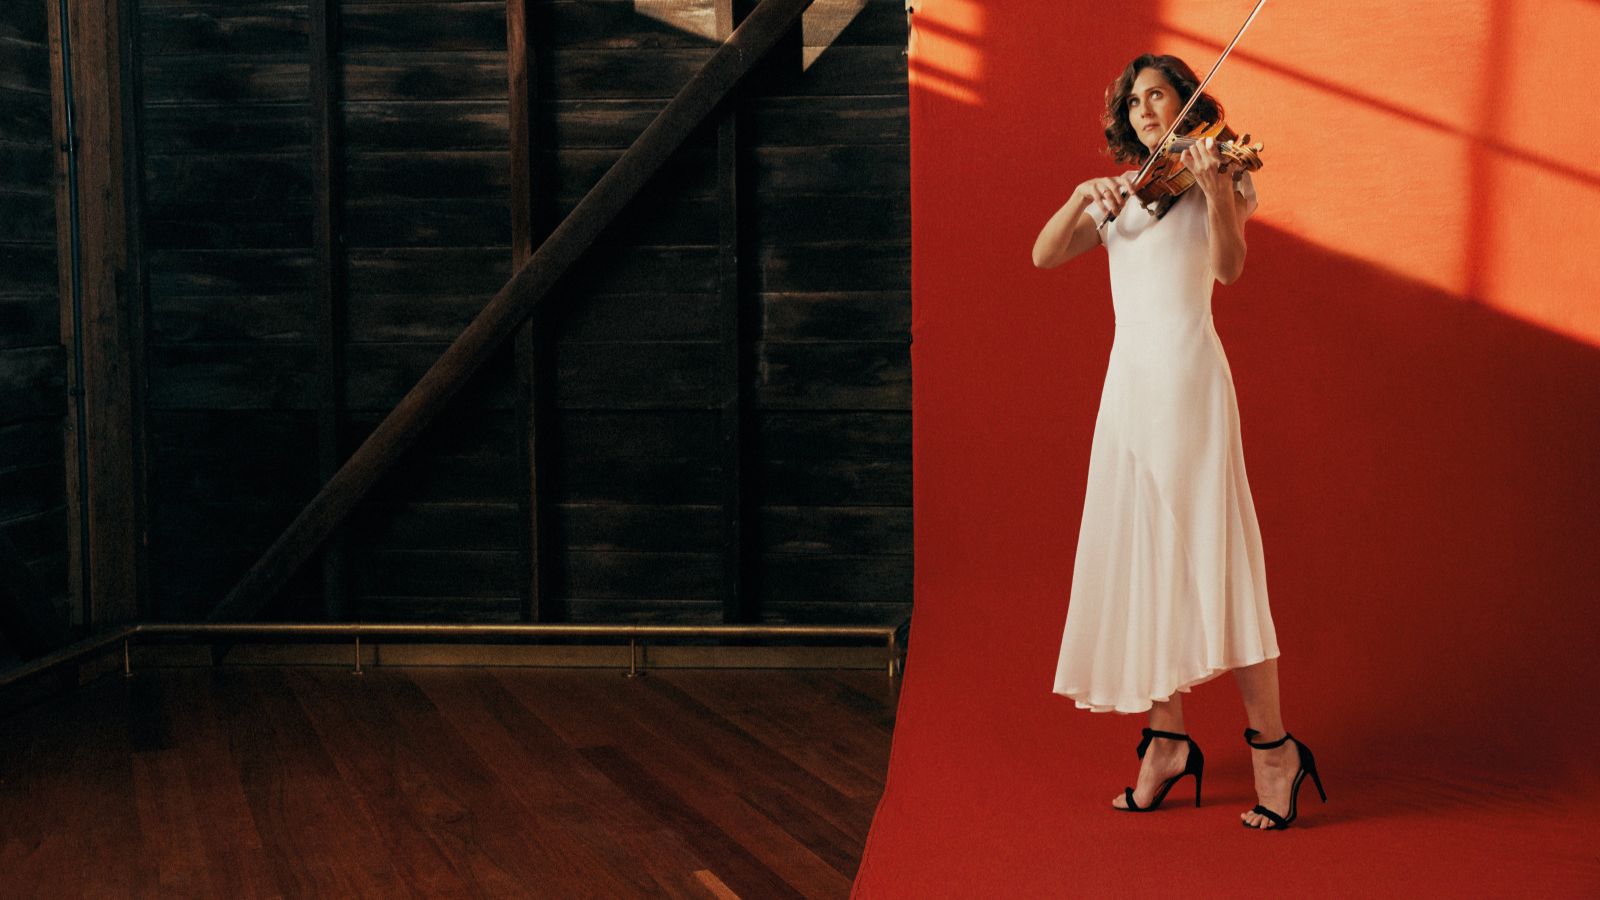 A woman wearing a white dress plays a violin.